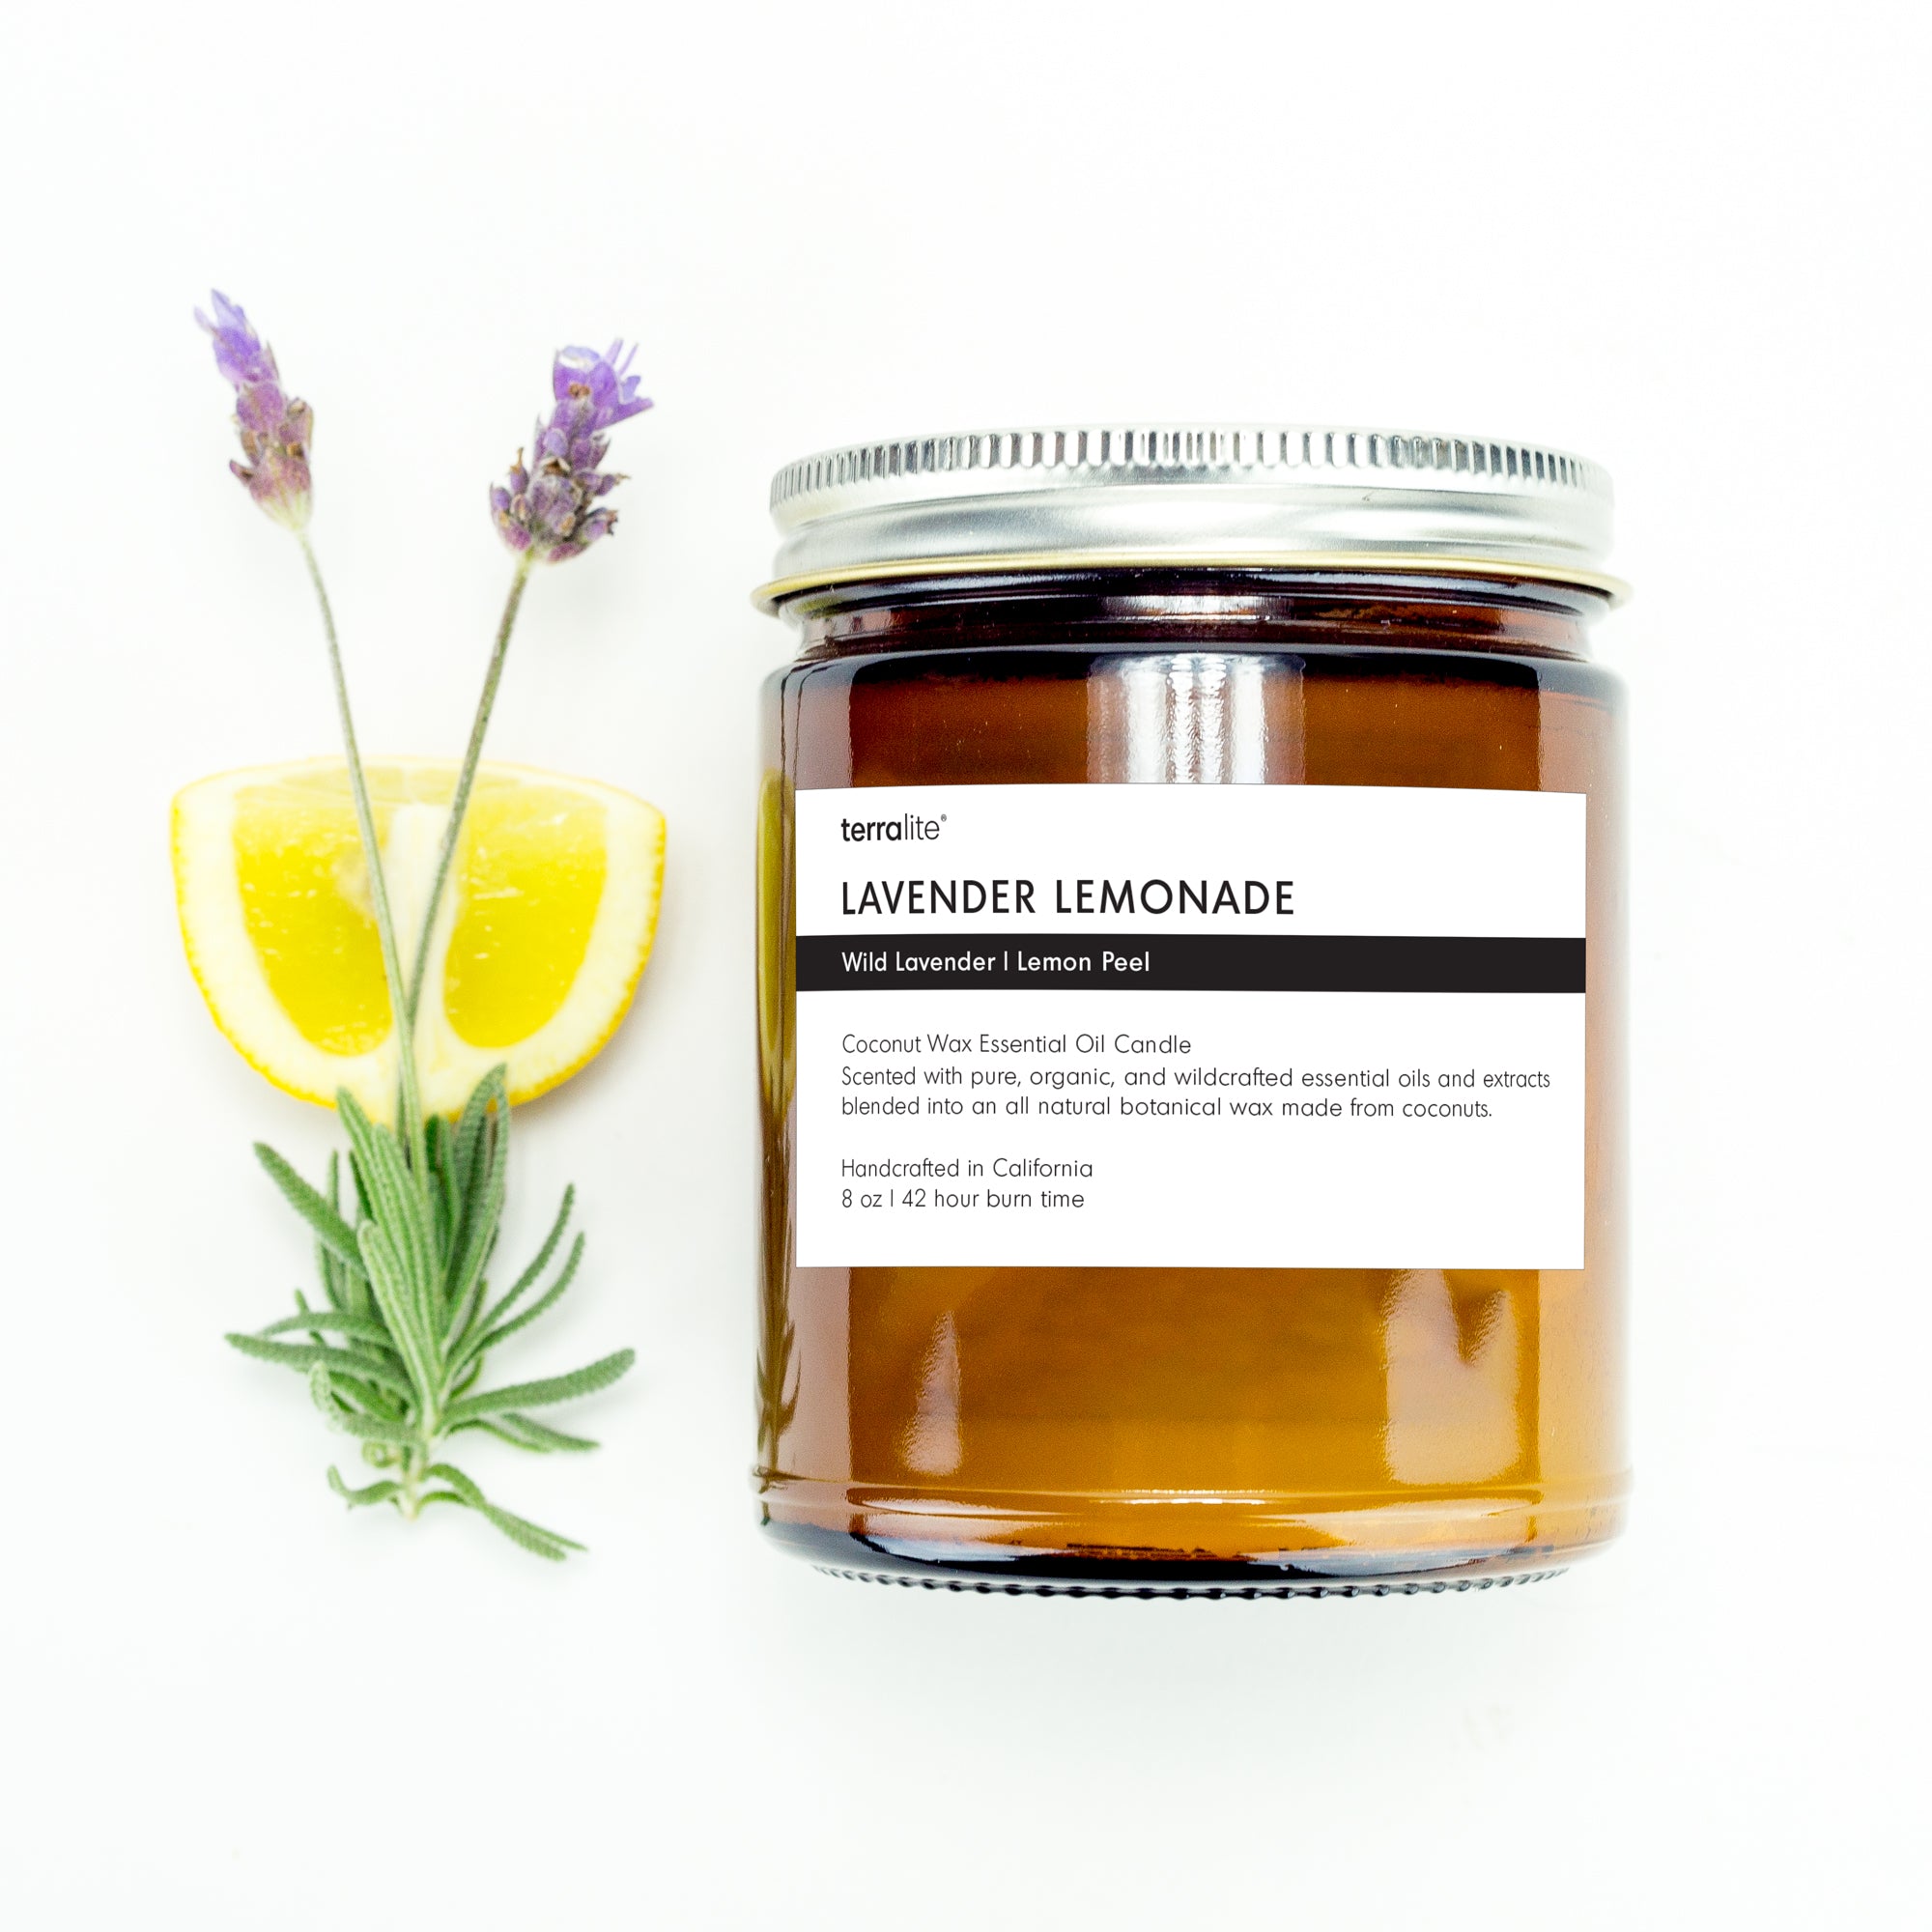 Lavender Lemonade essential oil candle scented with wild lavender and lemon peel essential oils.